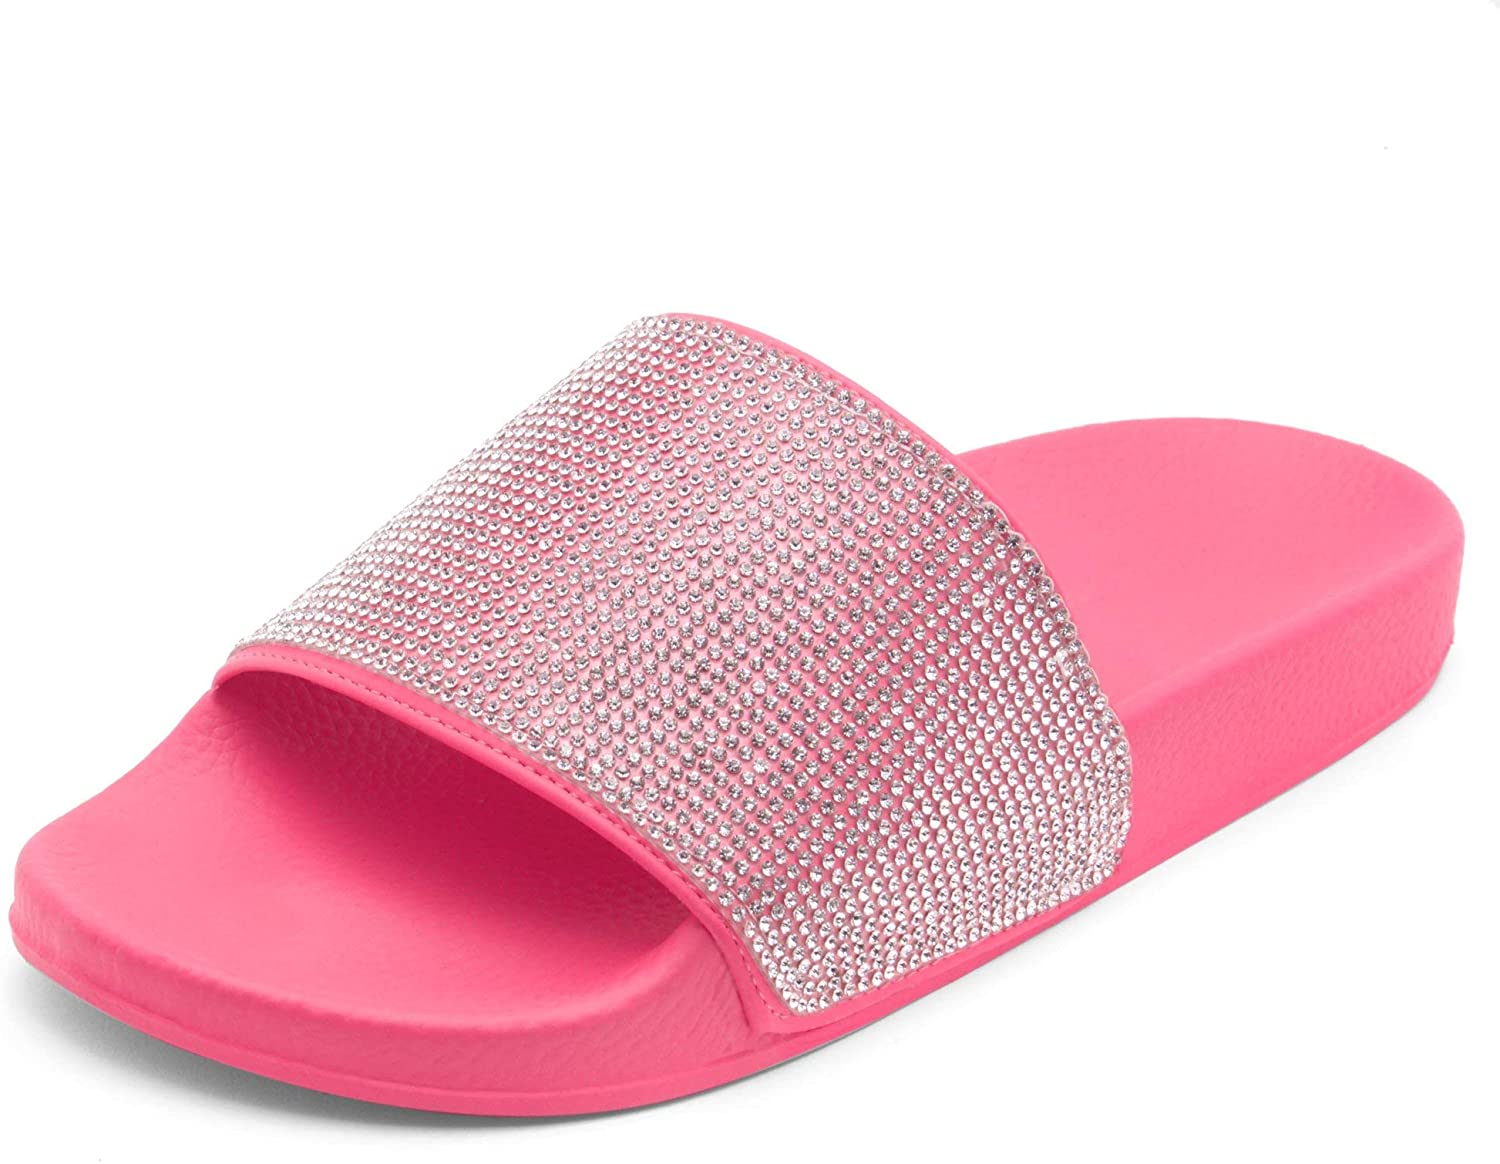 Herstyle Cosmic Women's Fashion Rhinestone Glitter Slide Slip On Mules Summer Shoe Platform Footbed Sandal Slippers